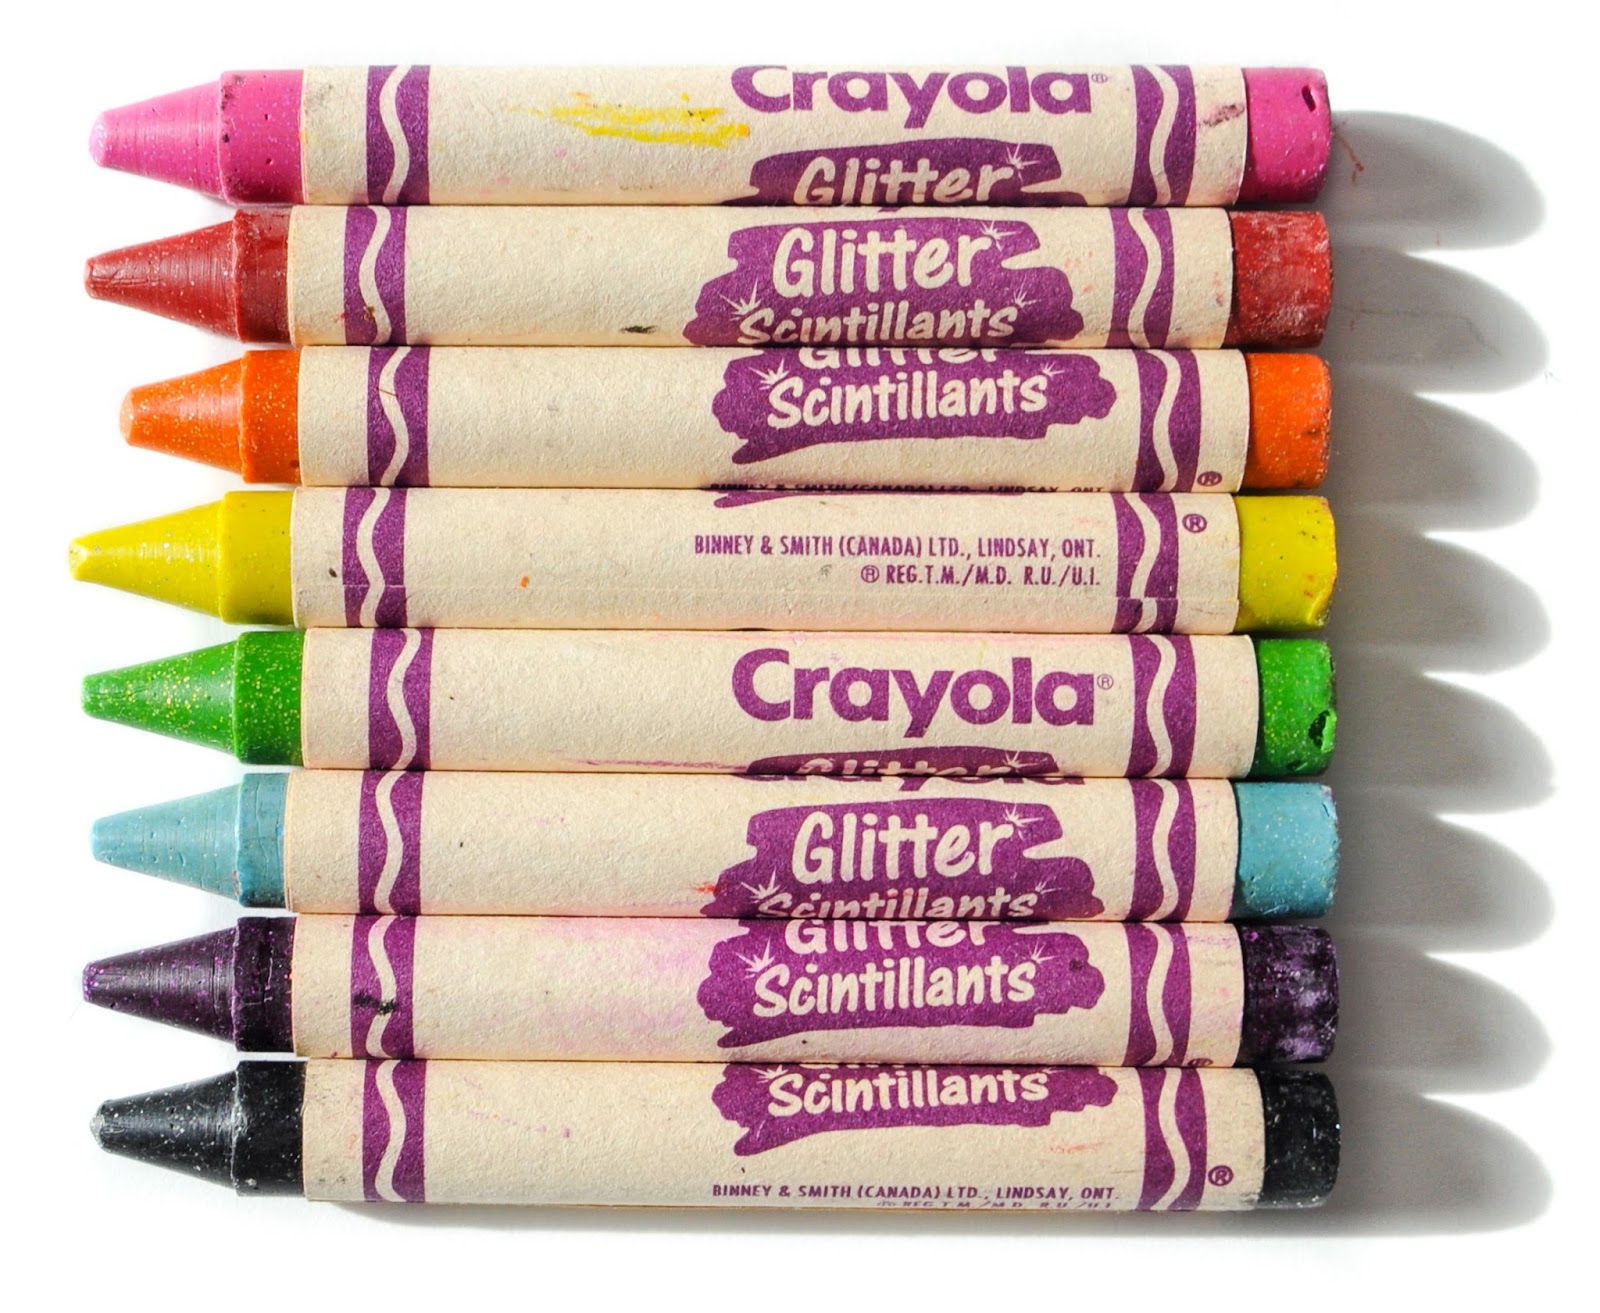 Crayola Glitter Crayons